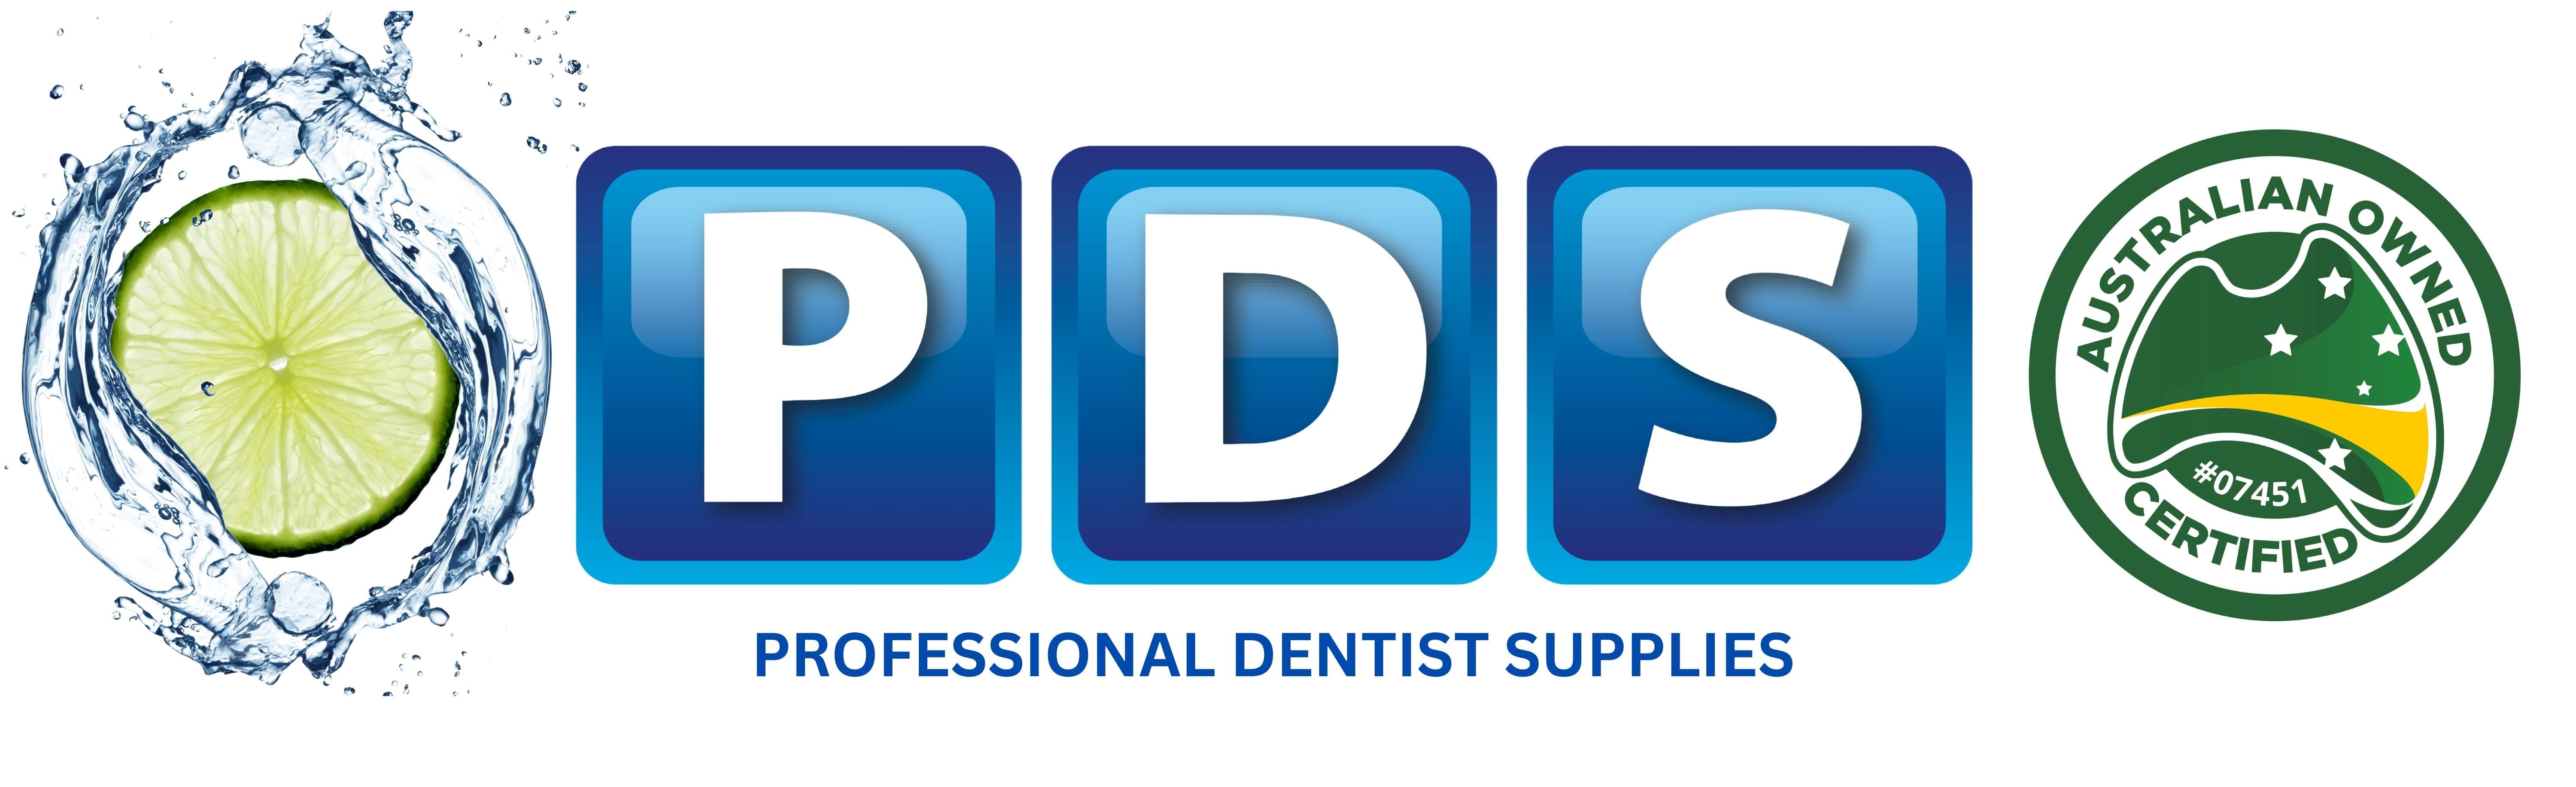 Professional Dentist Supplies